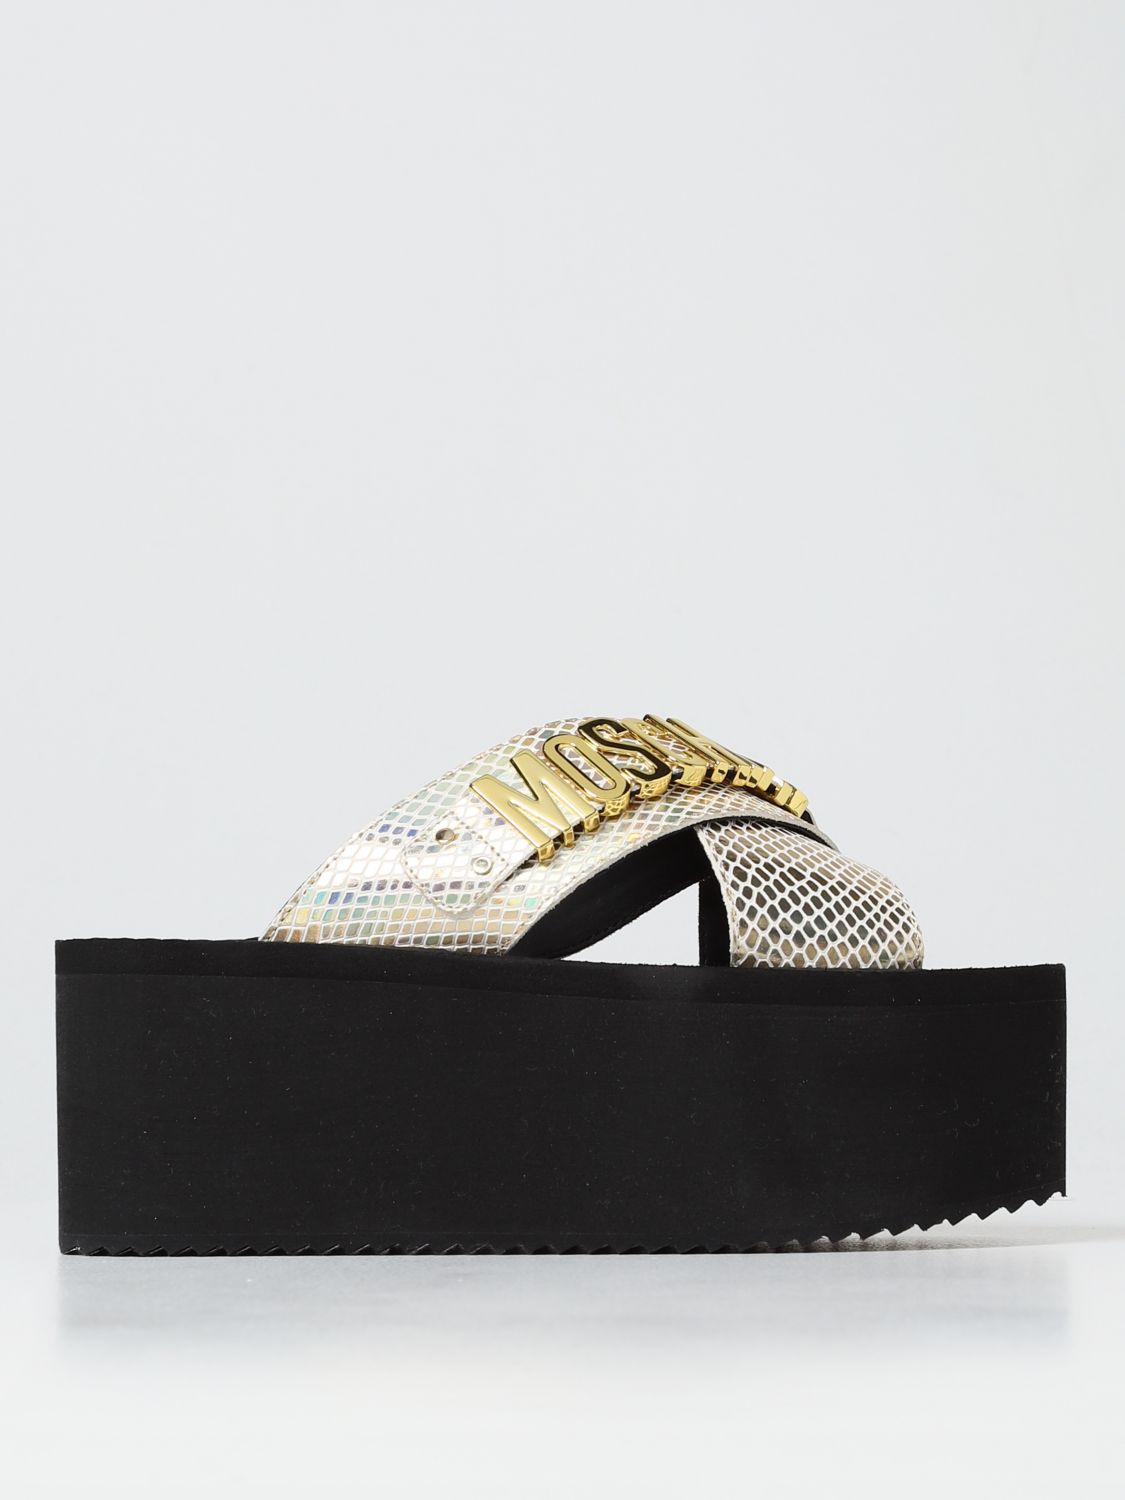 سوري متقاعد الصحة  MOSCHINO COUTURE: platform sandals with logo | Wedge Shoes Moschino Couture  Women Gold | Wedge Shoes Moschino Couture MA28118I1EMI0 GIGLIO.COM